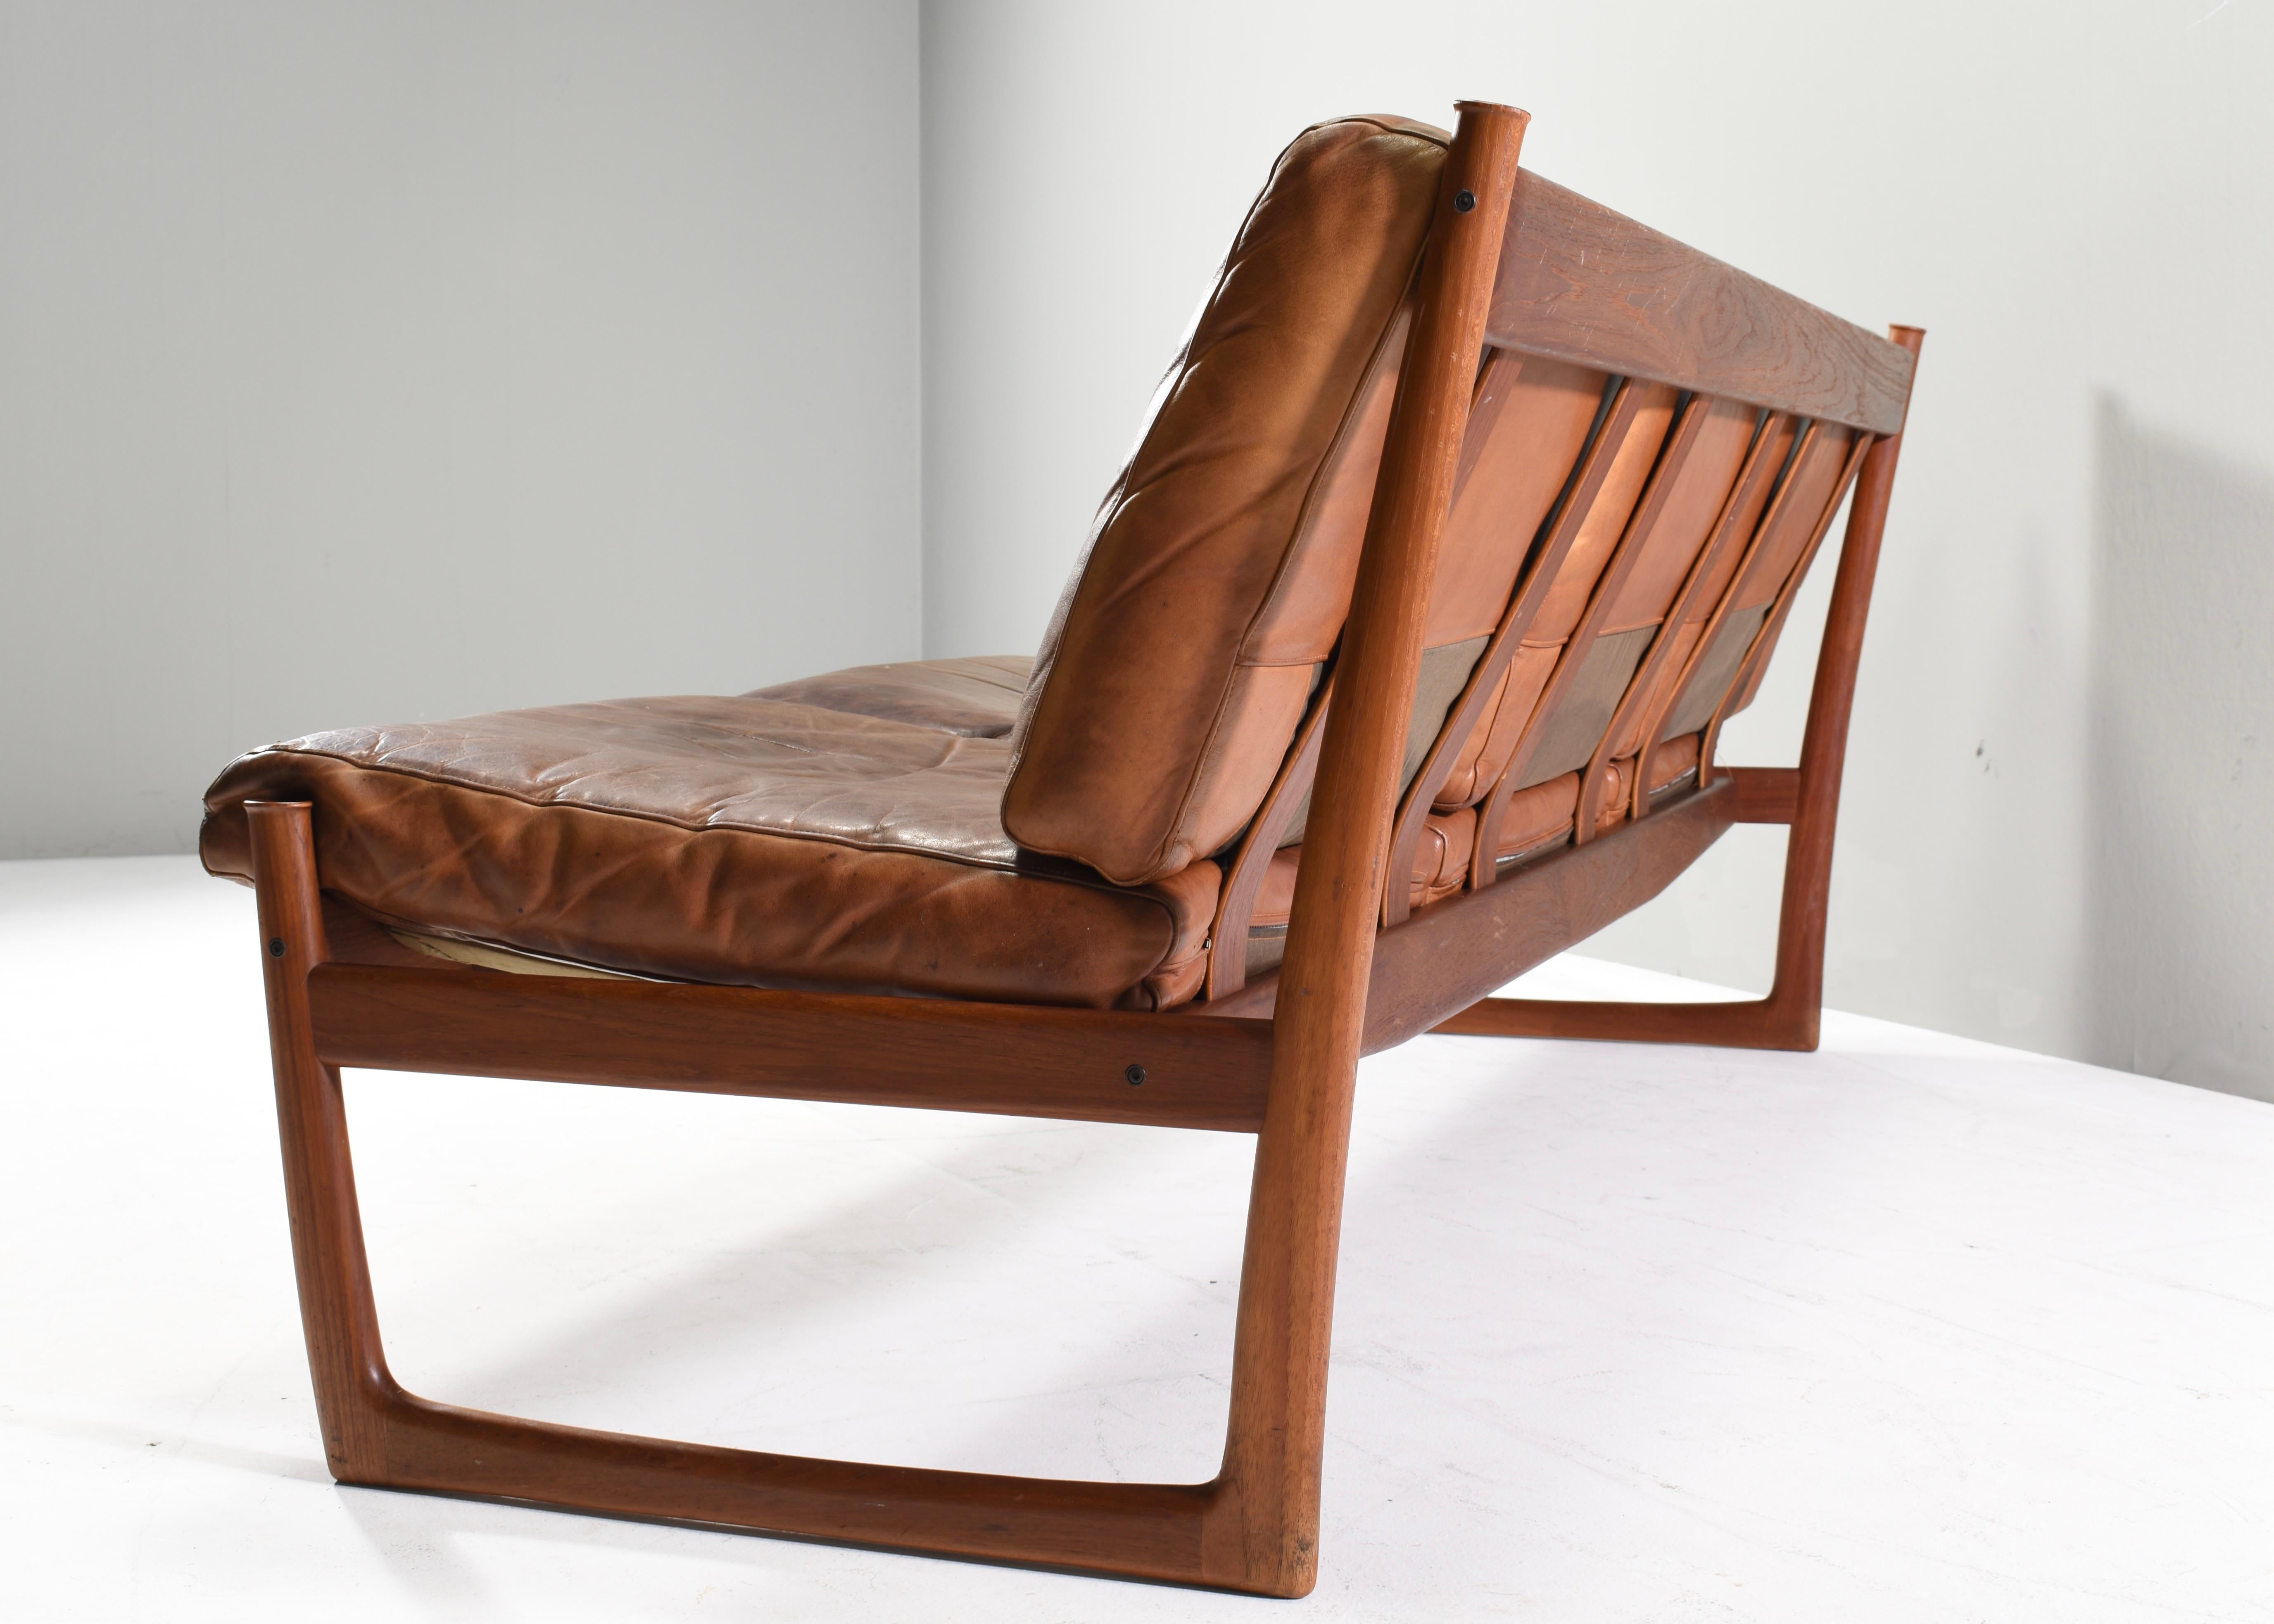 Peter Hvidt & Orla Mølgaard FD130 Teak sofa in Cognac Leather - Denmark, 1950's For Sale 11